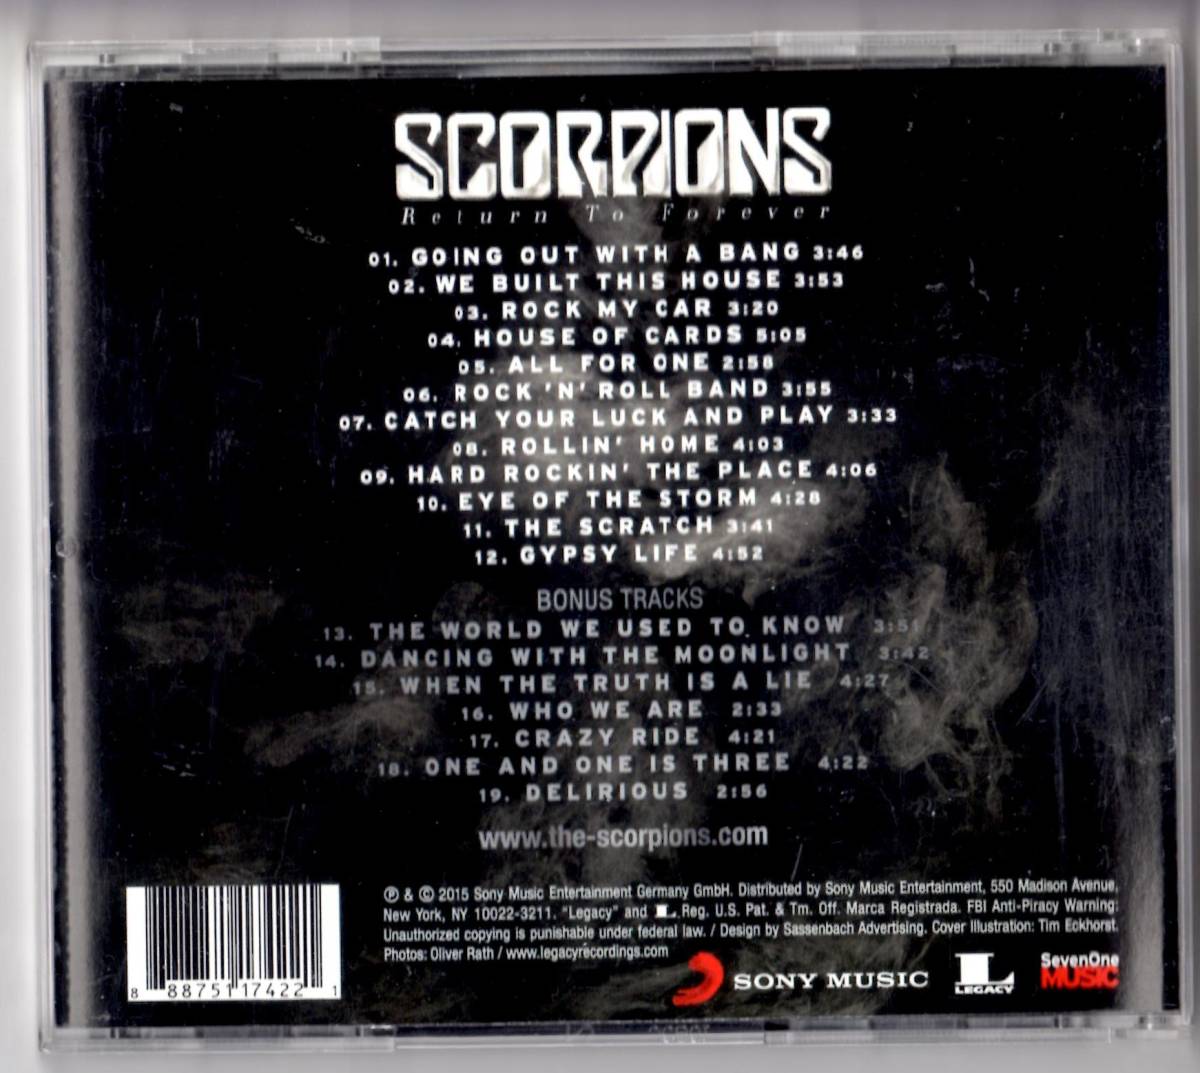 Used CD 輸入盤 スコーピオンズ Scorpions『祝杯の蠍団 リターン・トゥ・フォエヴァー』- Return To Forever(2015年)全19曲アメリカ盤